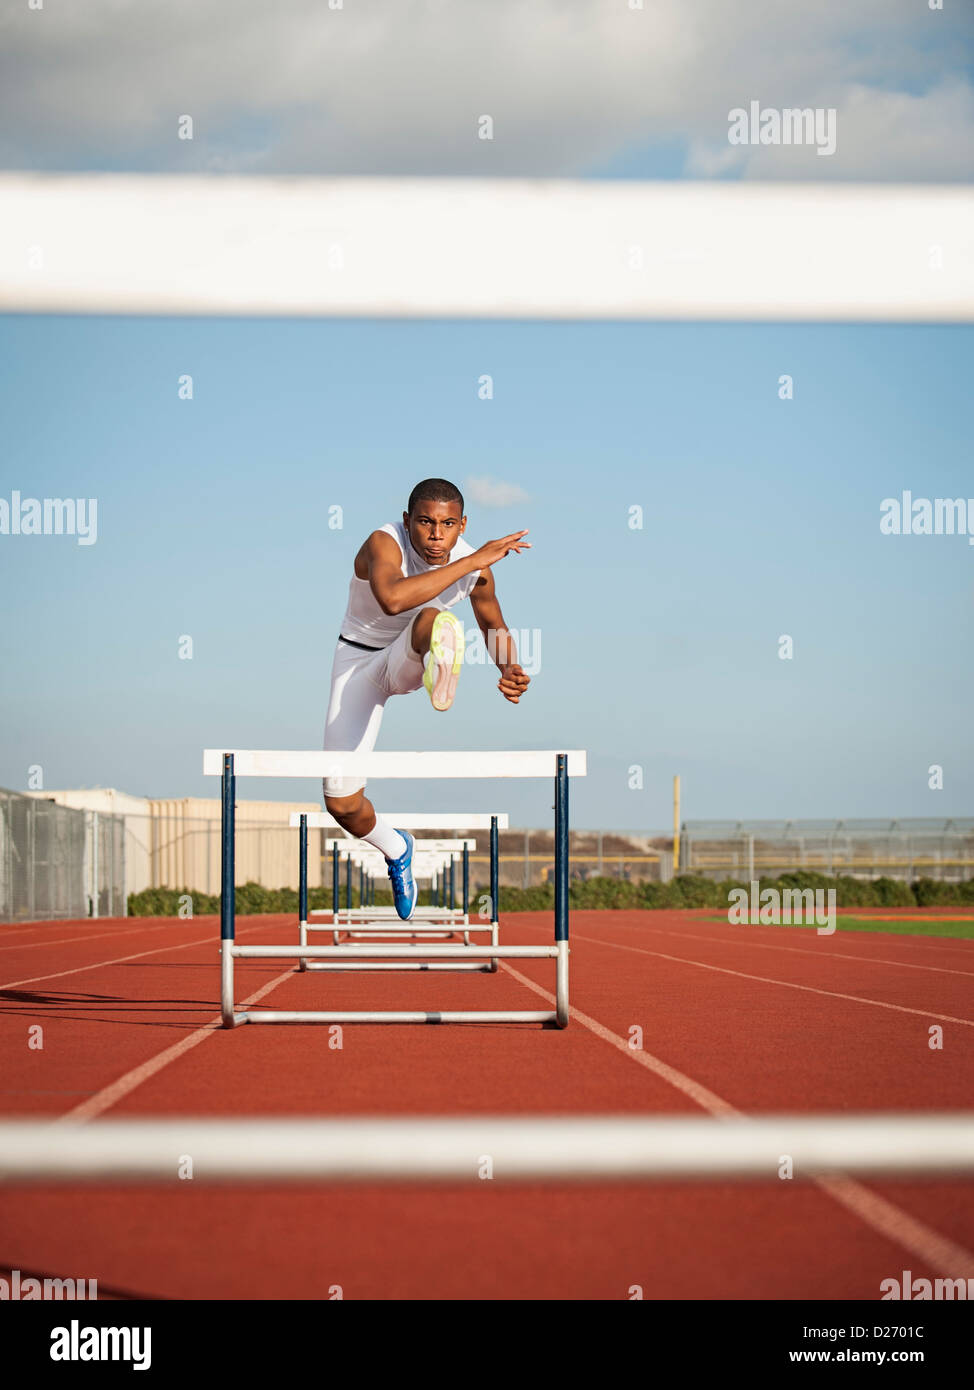 USA, California, Fontana, Boy (12-13) hurdling on running track Stock Photo